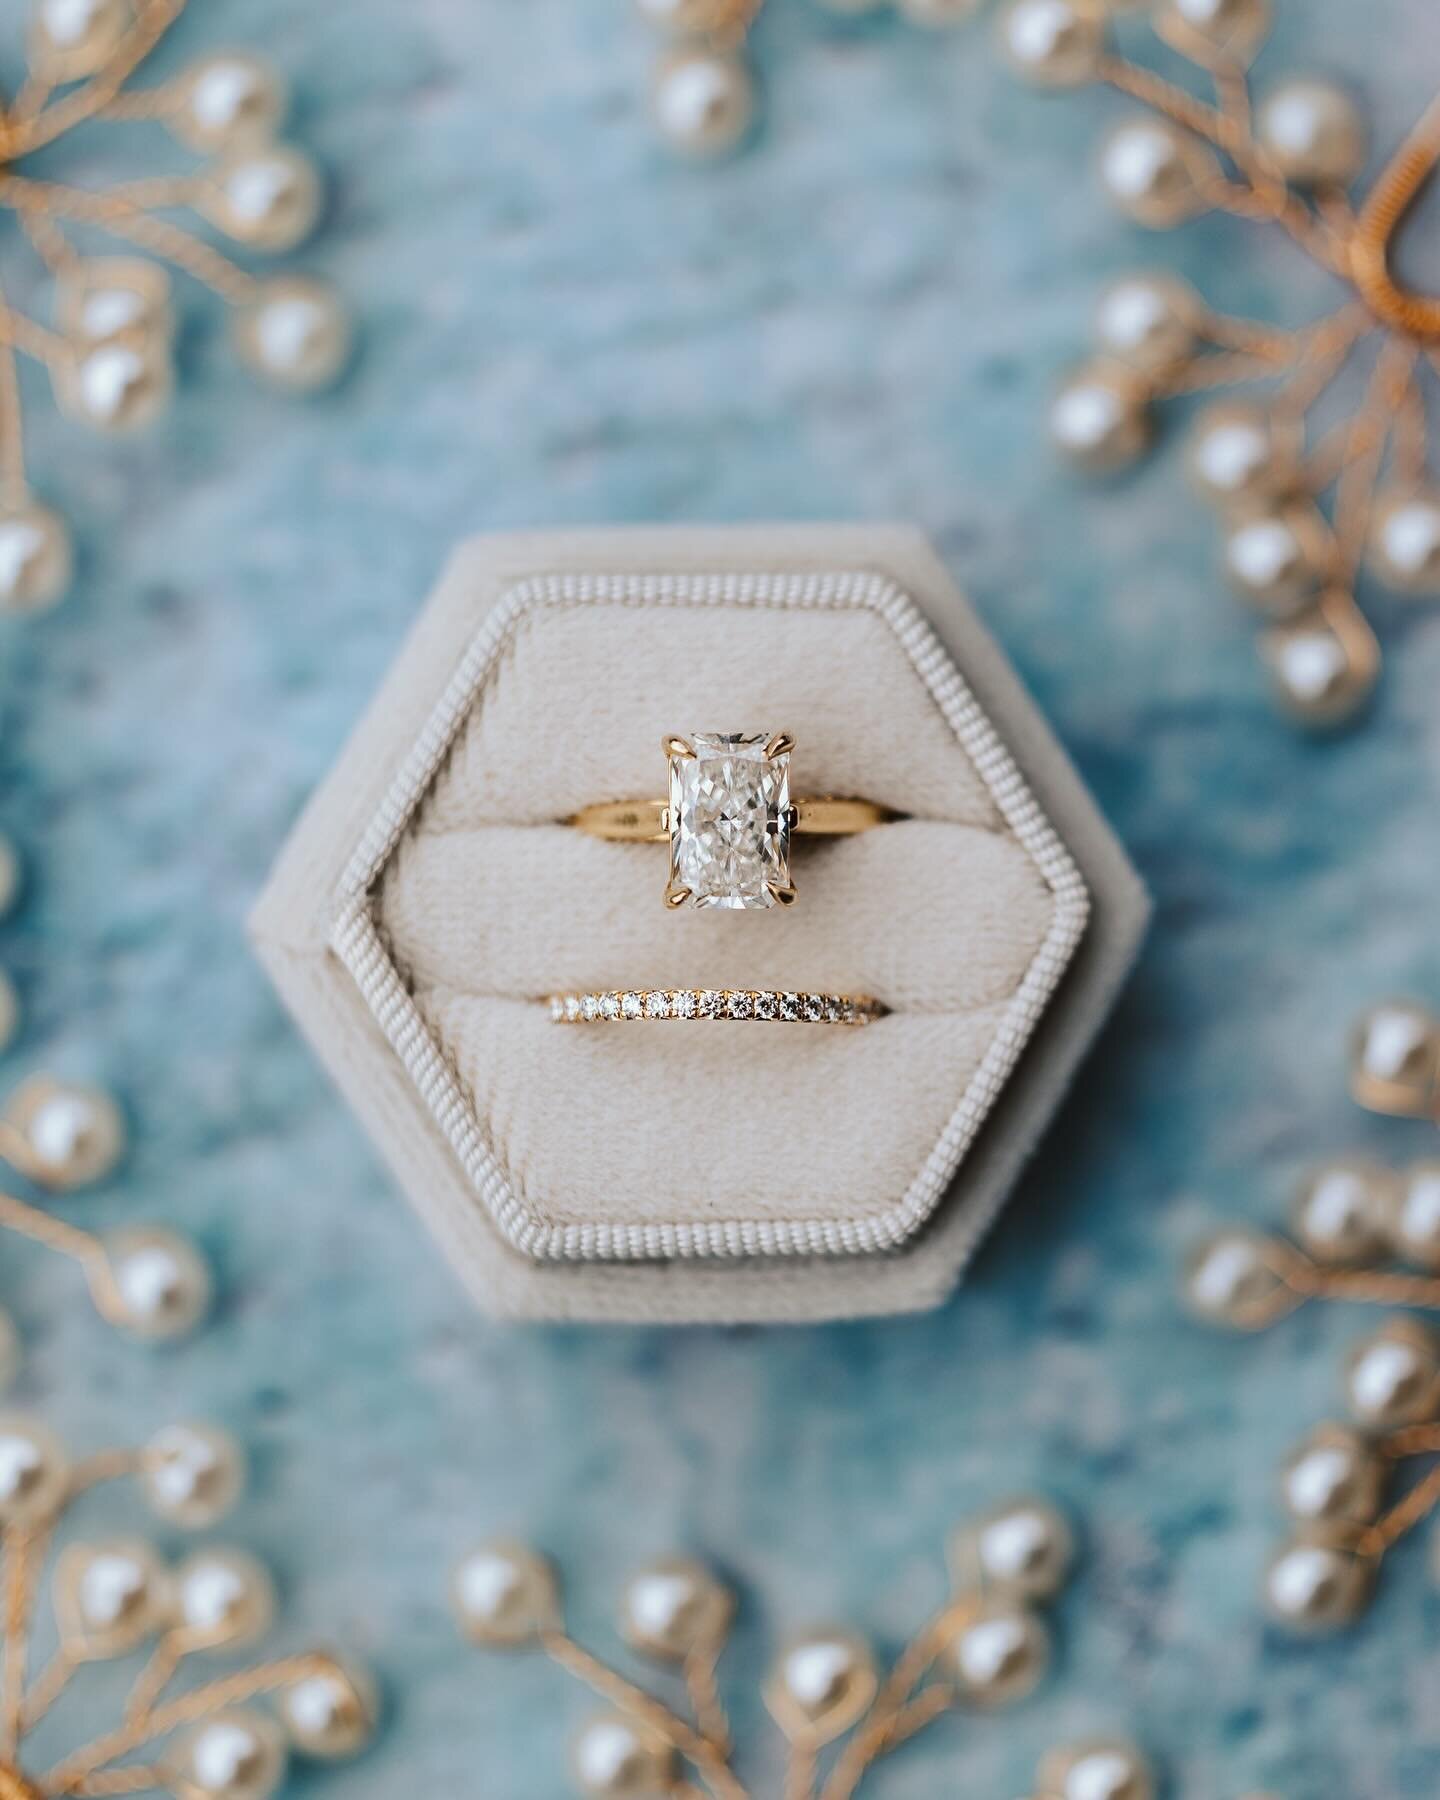 A moment for this ring please! 

 #weddingphotographer #pittsburghphotographer #pittsburgh #burghbrides #lookslikefilm #weddingday #ringshot #weddingrings #diamonds #brideandgroom #truetolifeedits #canon #eastcoastweddings #winterwedding #vintagewedd